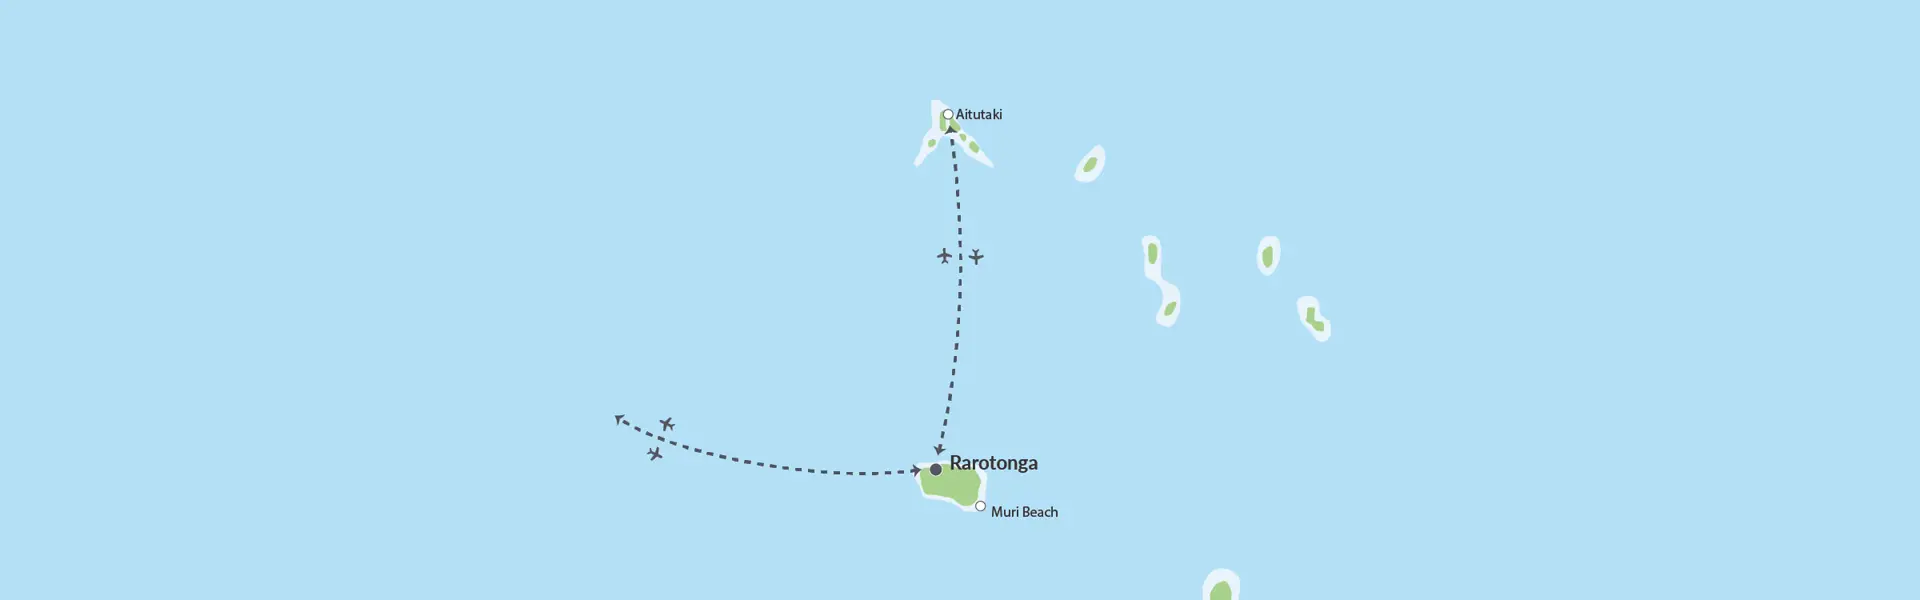 DK Paradisferie I Cook Islands